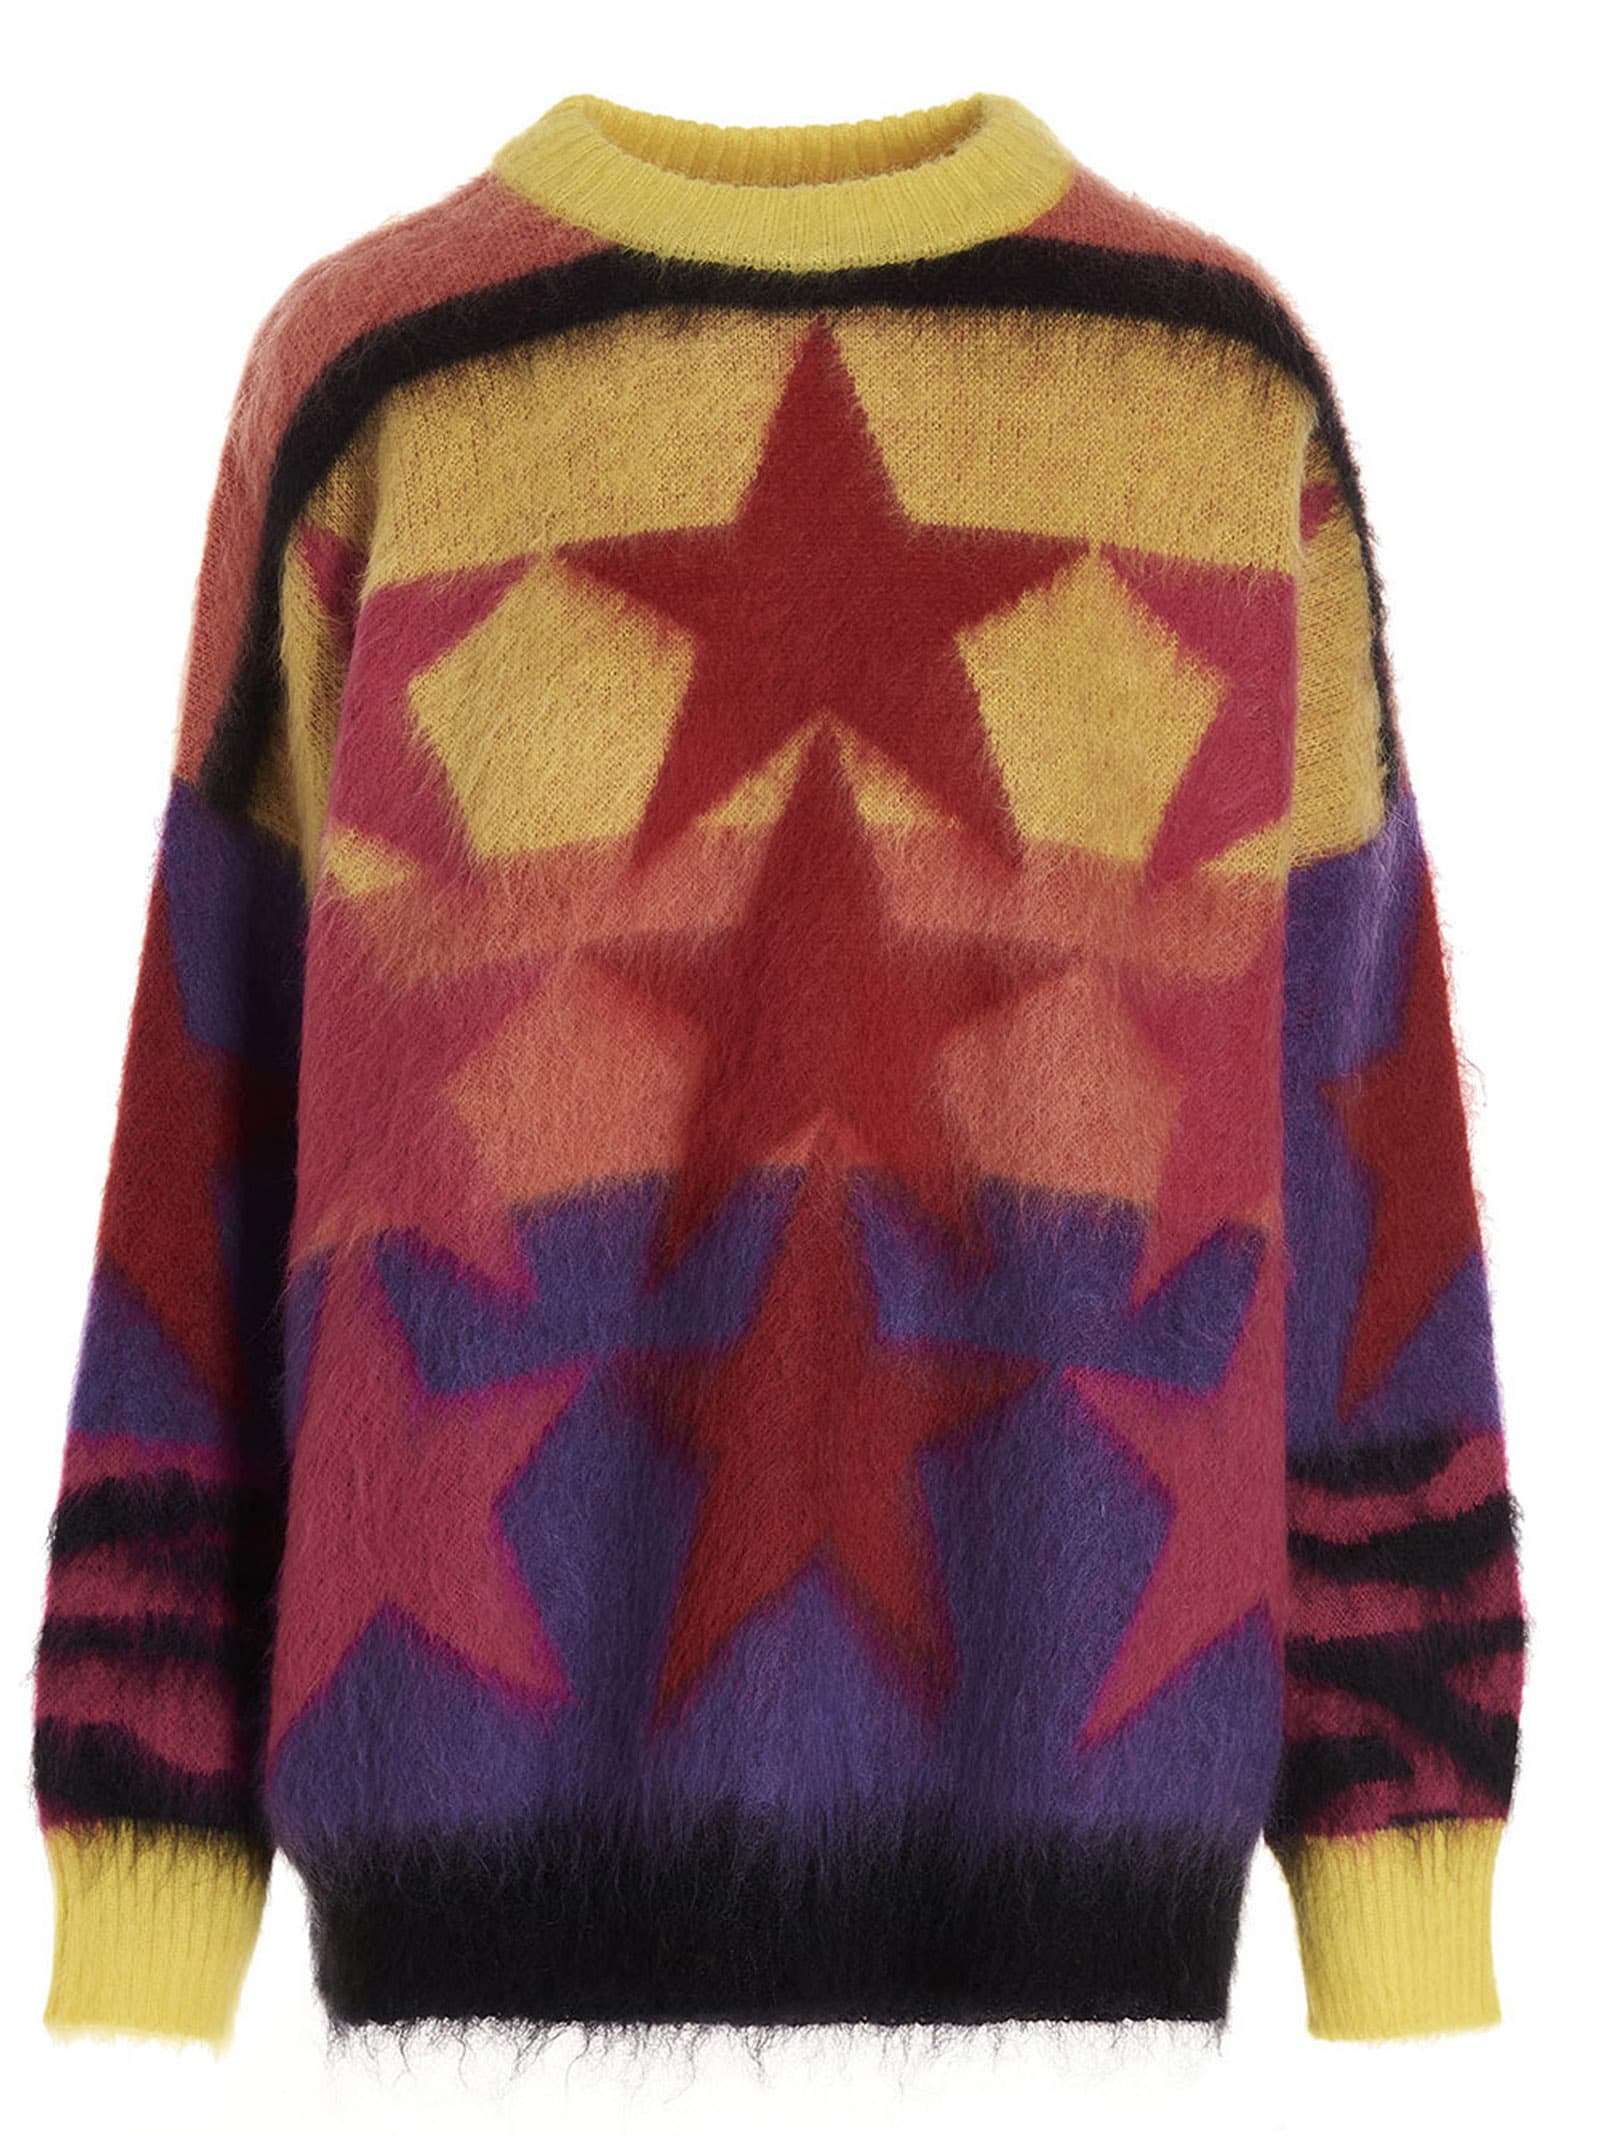 Palm Angels stars Sweater